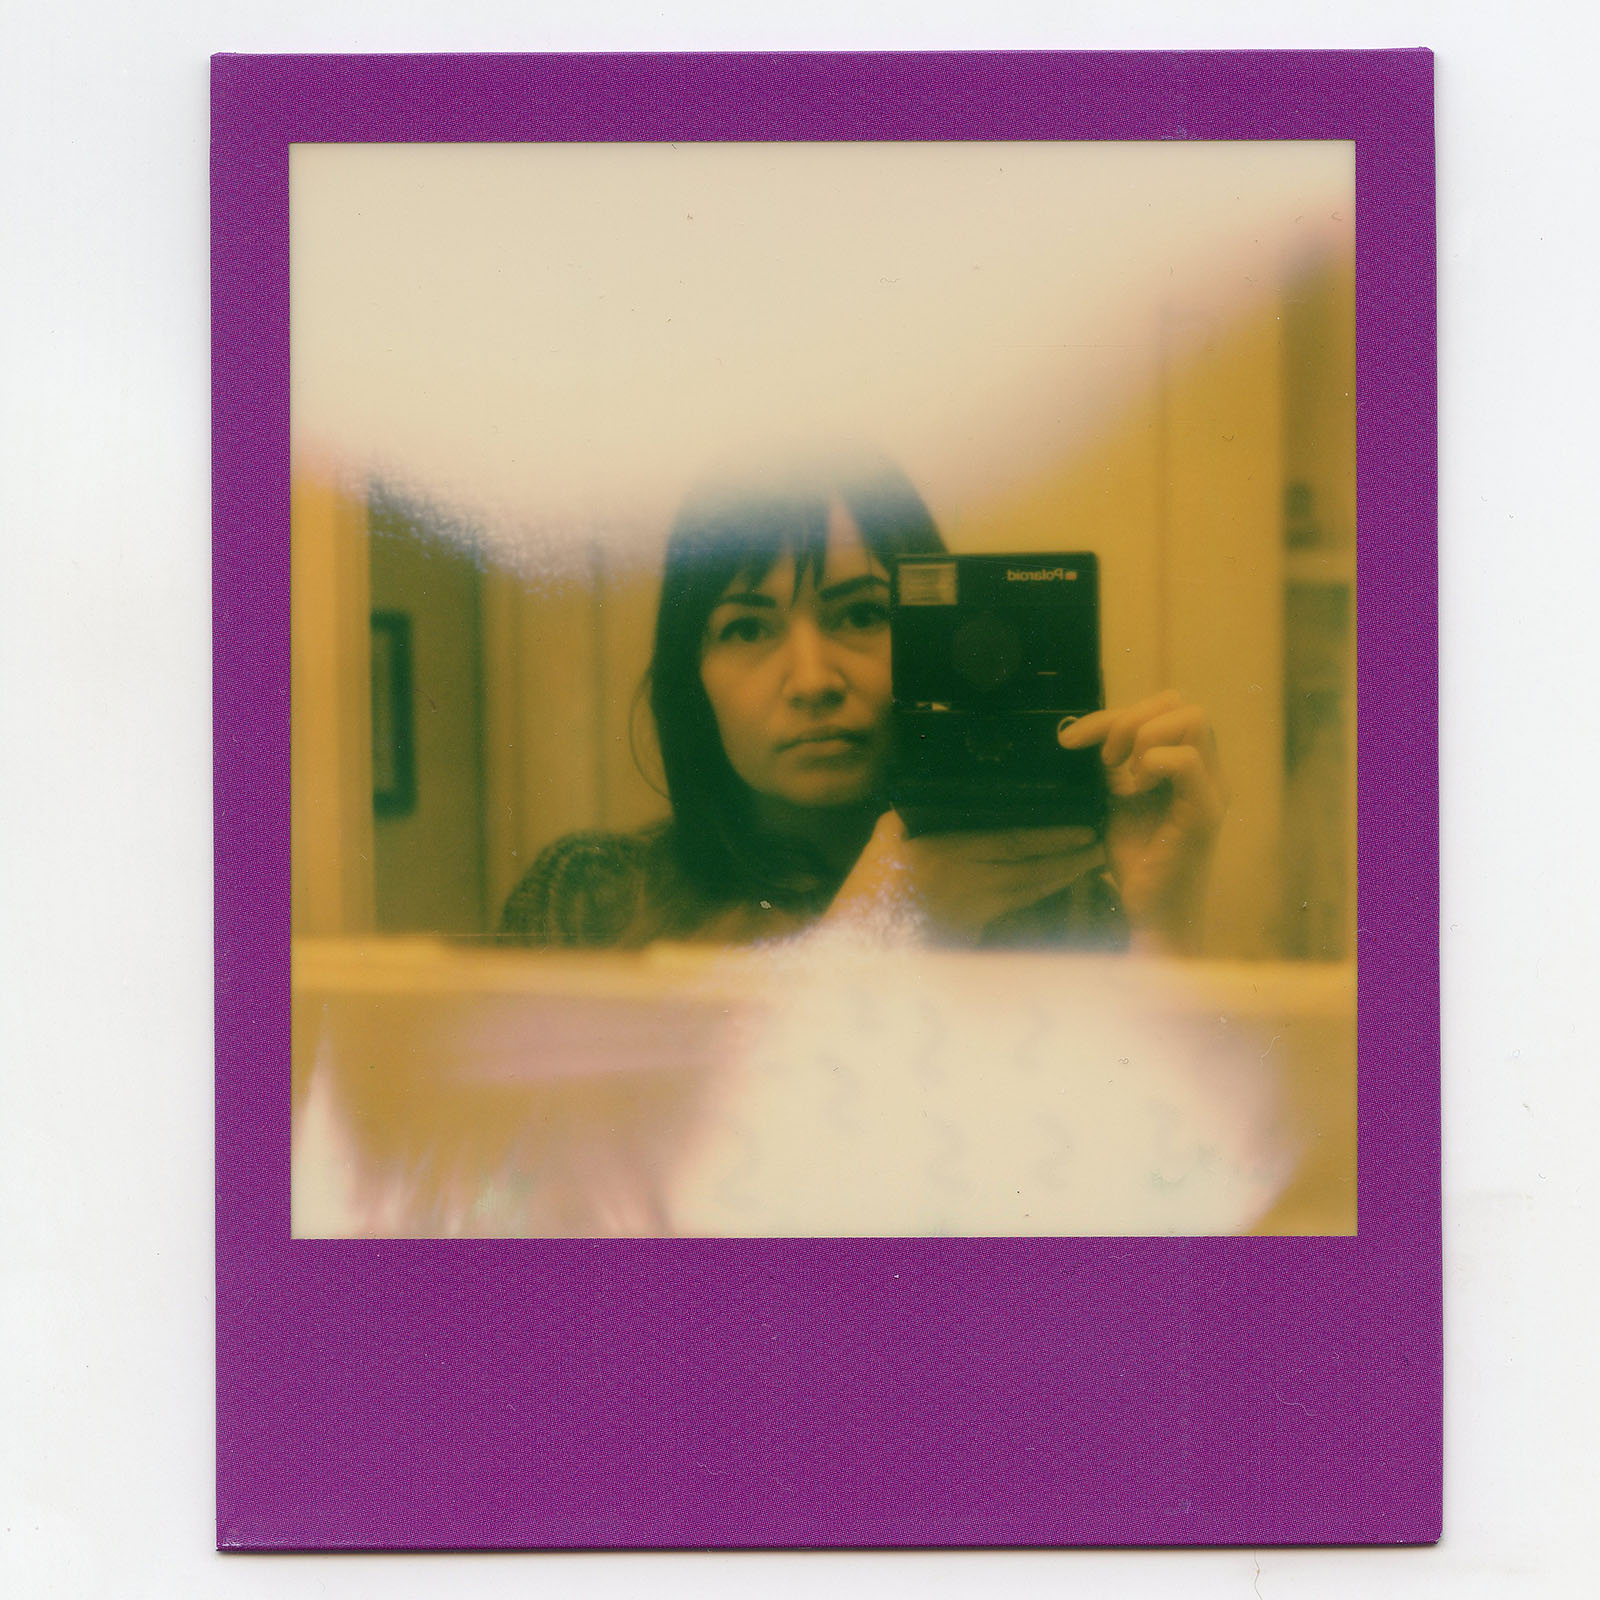 Self-portrait in a bathroom mirror with a Polaroid camera